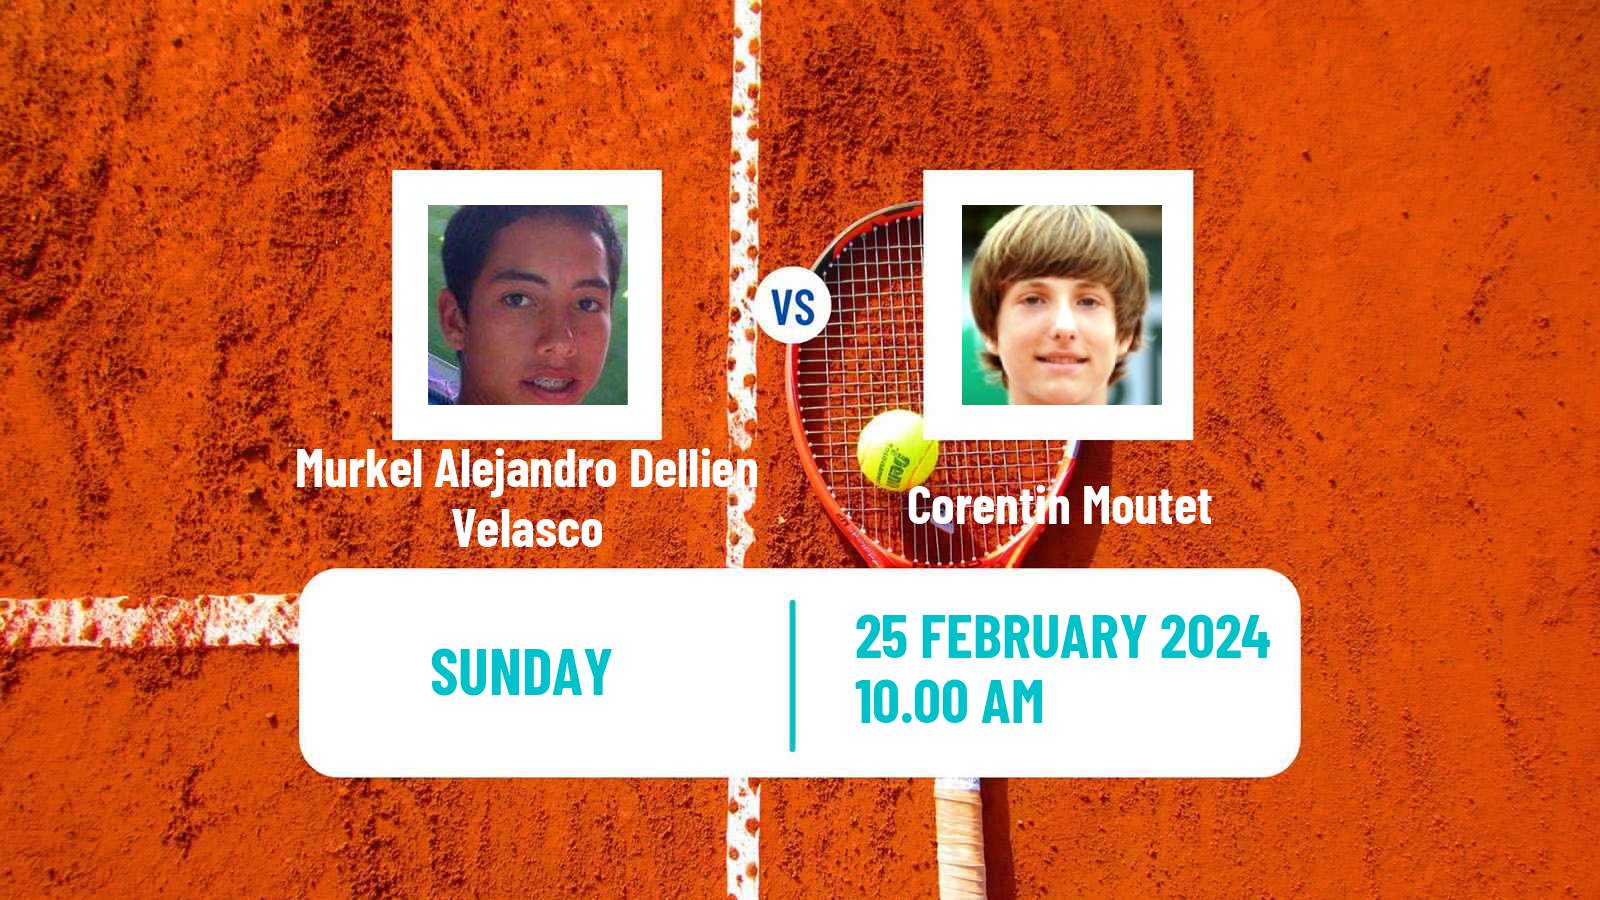 Tennis ATP Santiago Murkel Alejandro Dellien Velasco - Corentin Moutet